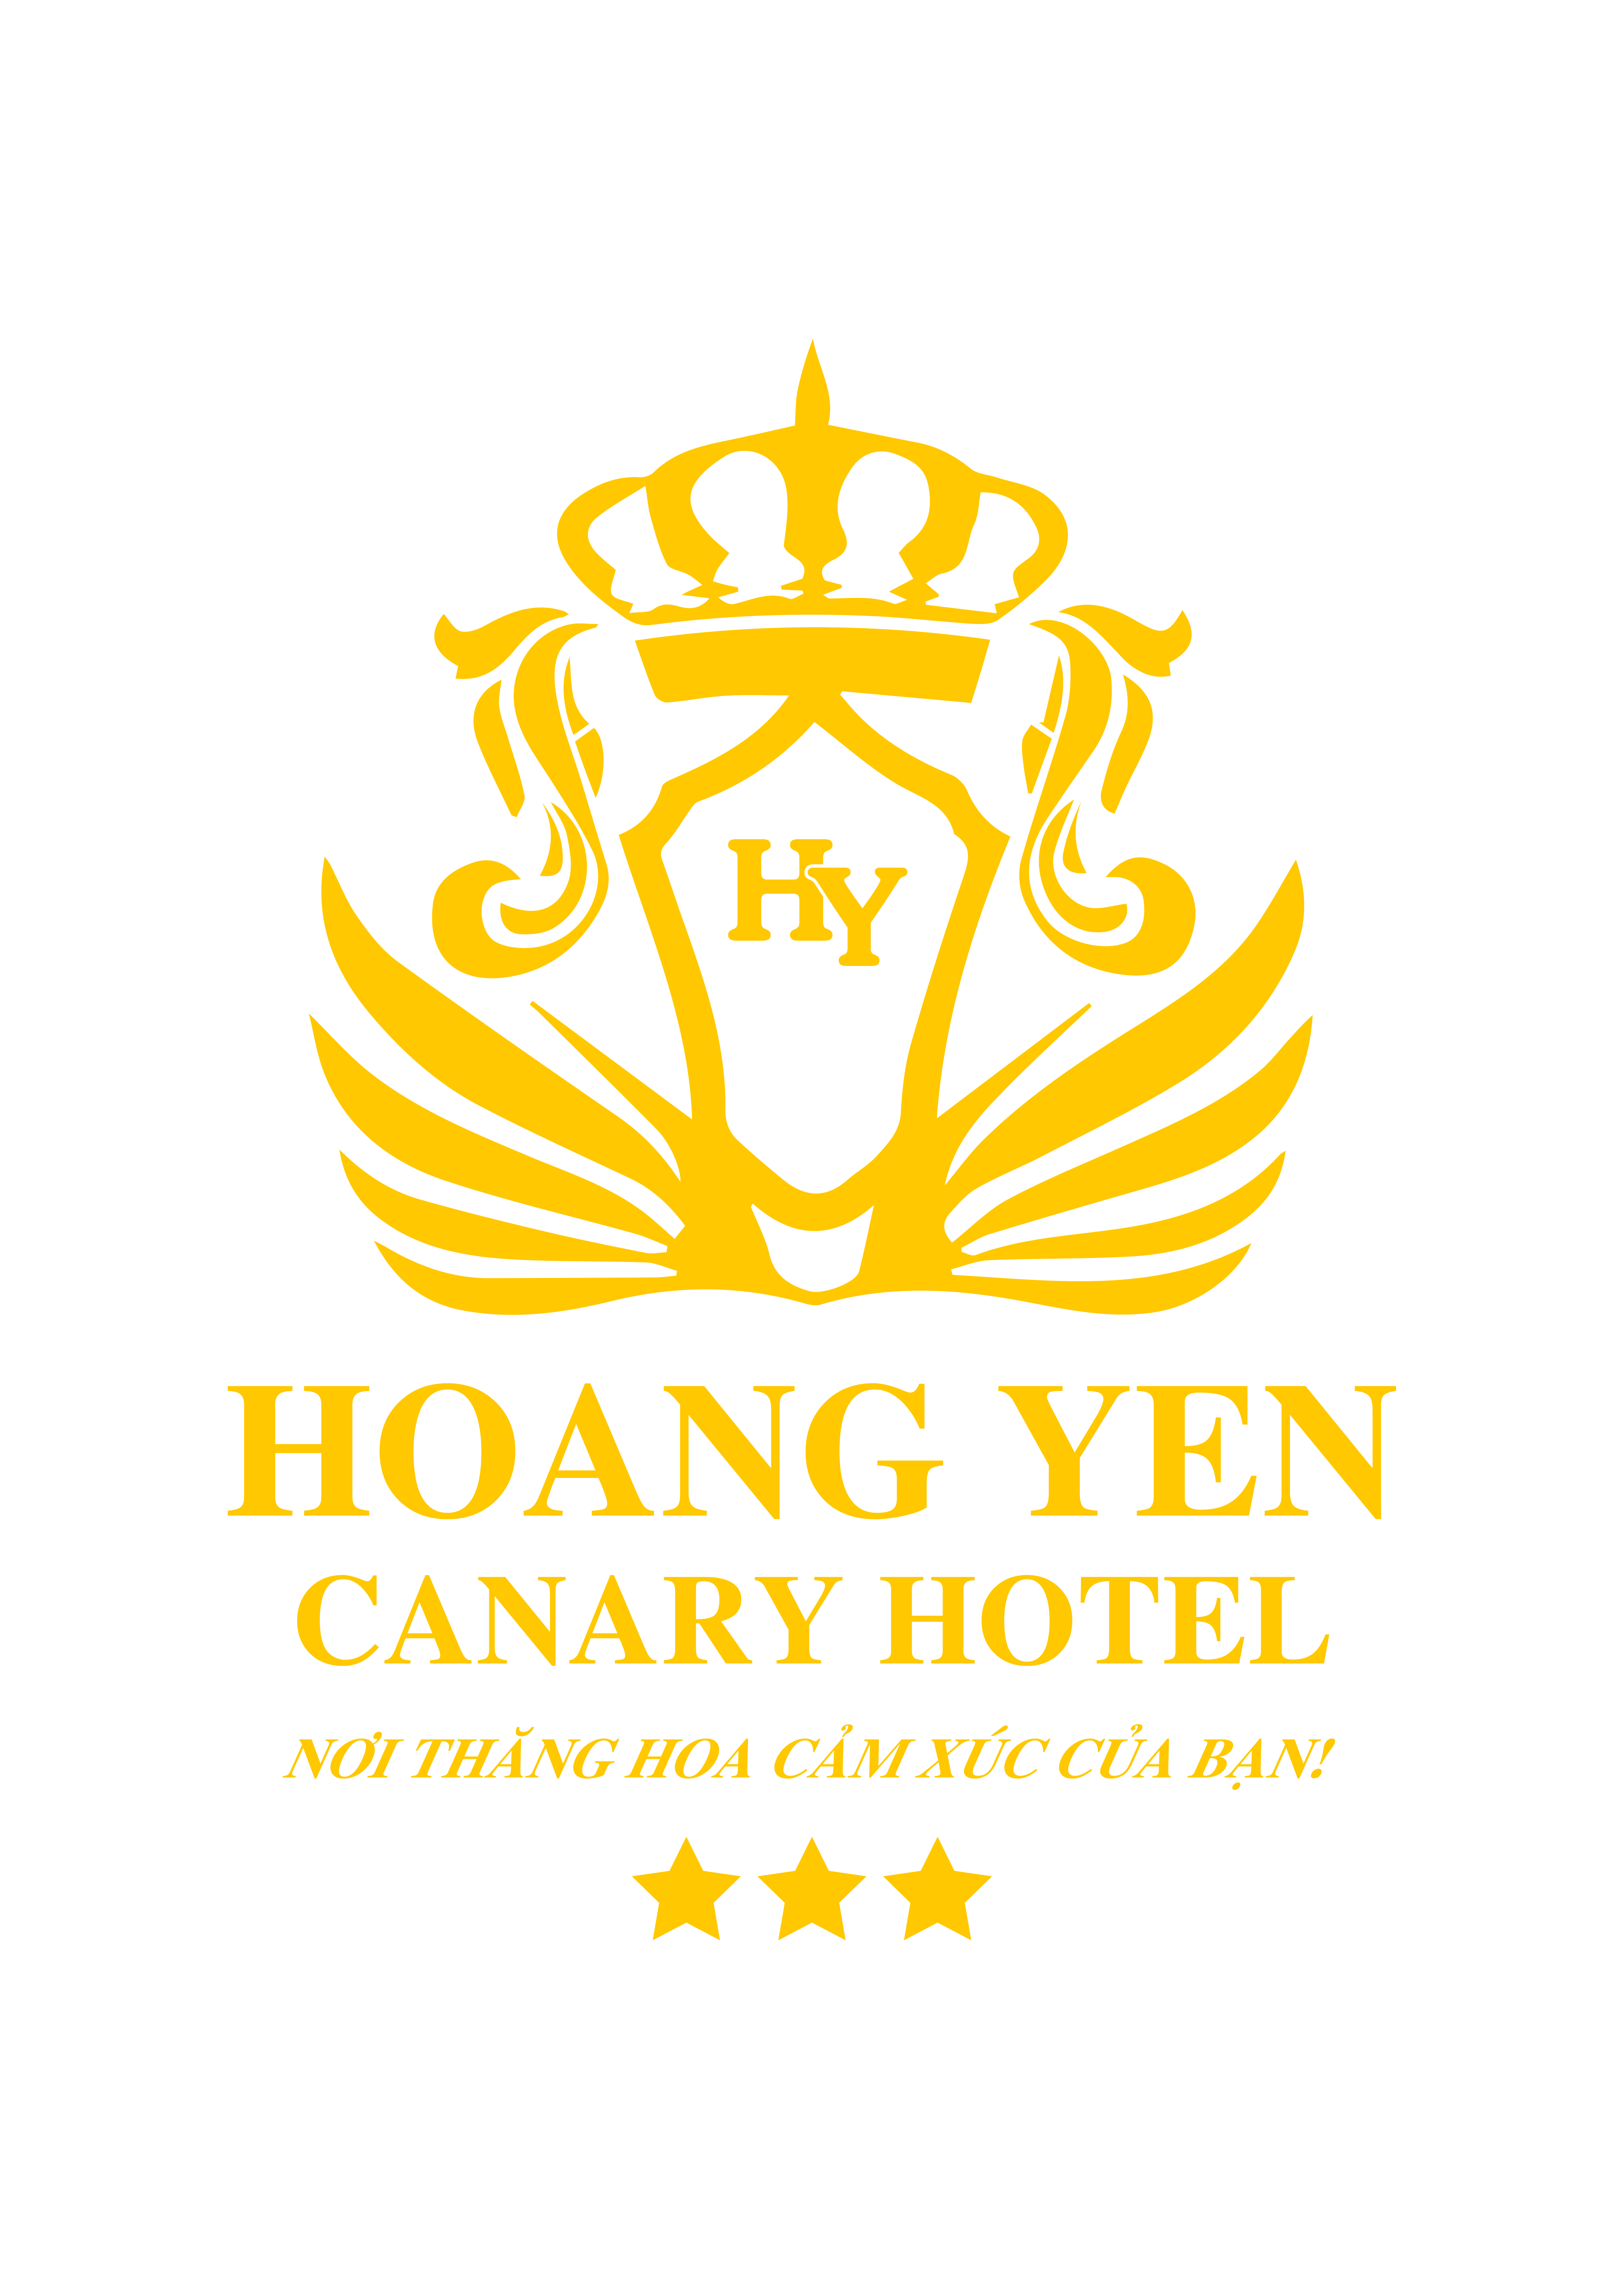 HOANG YEN CANARY HOTEL